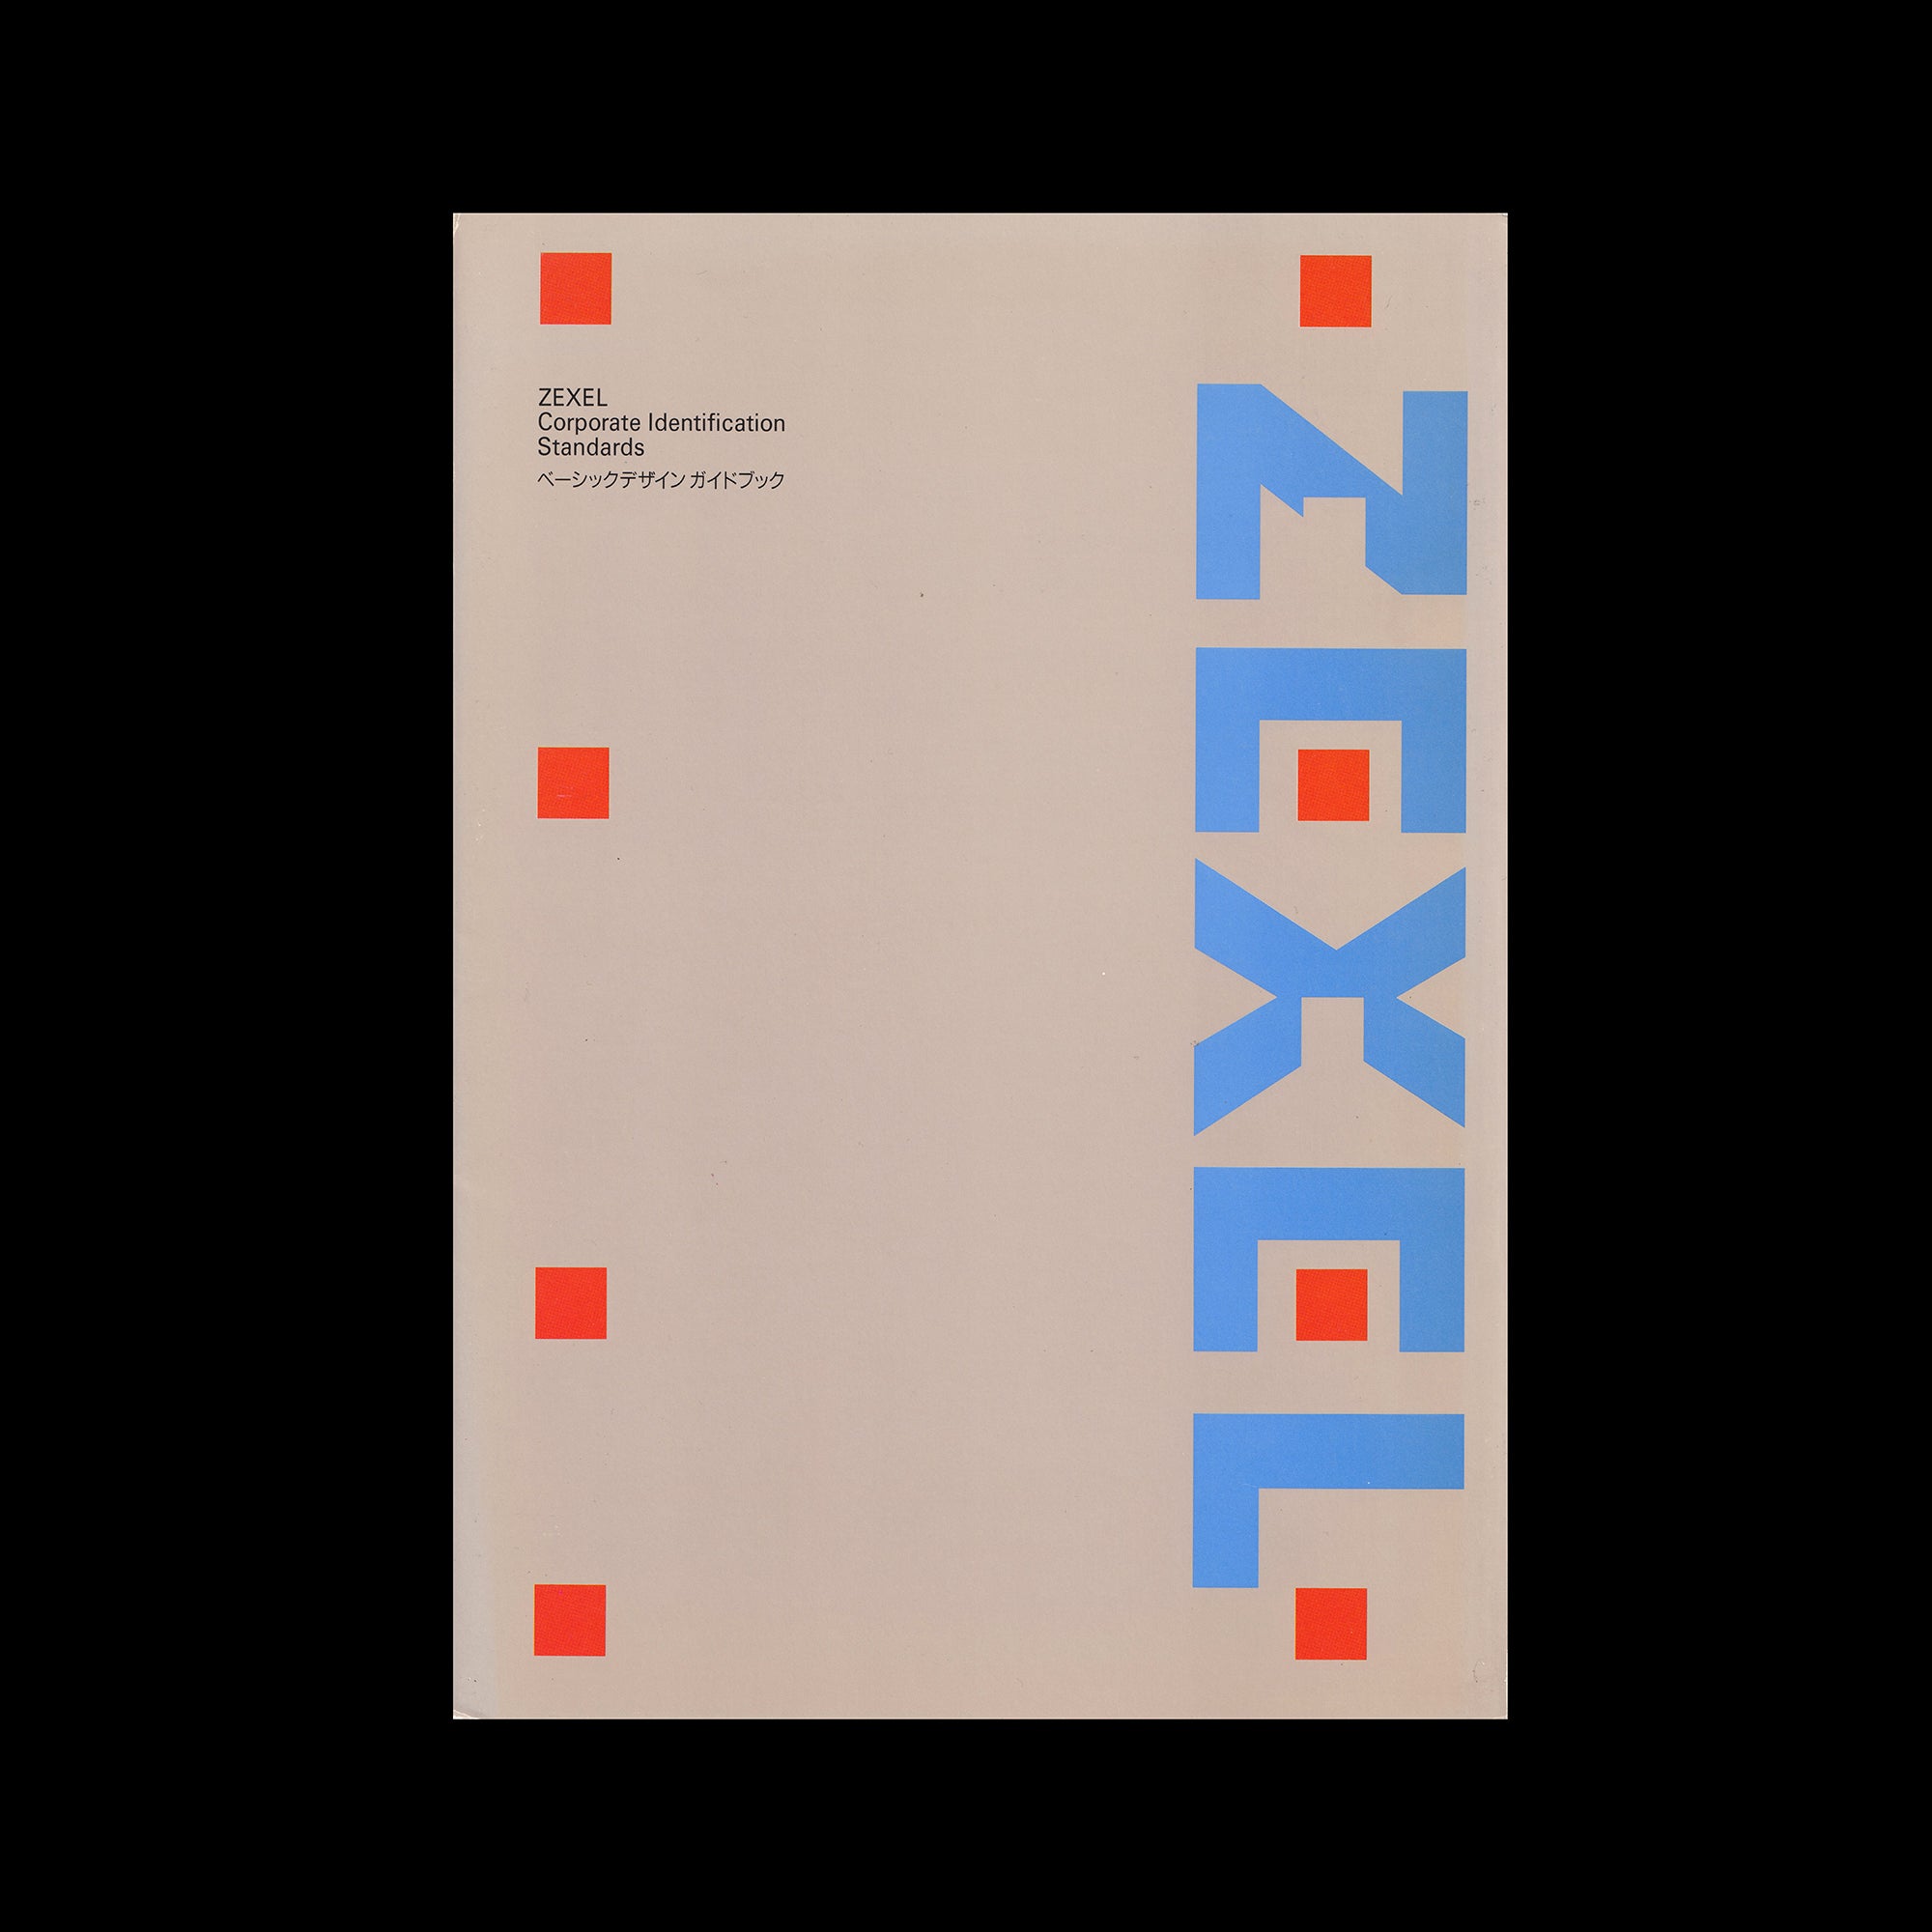 Zexel, Brand Standards PAOS, 1991